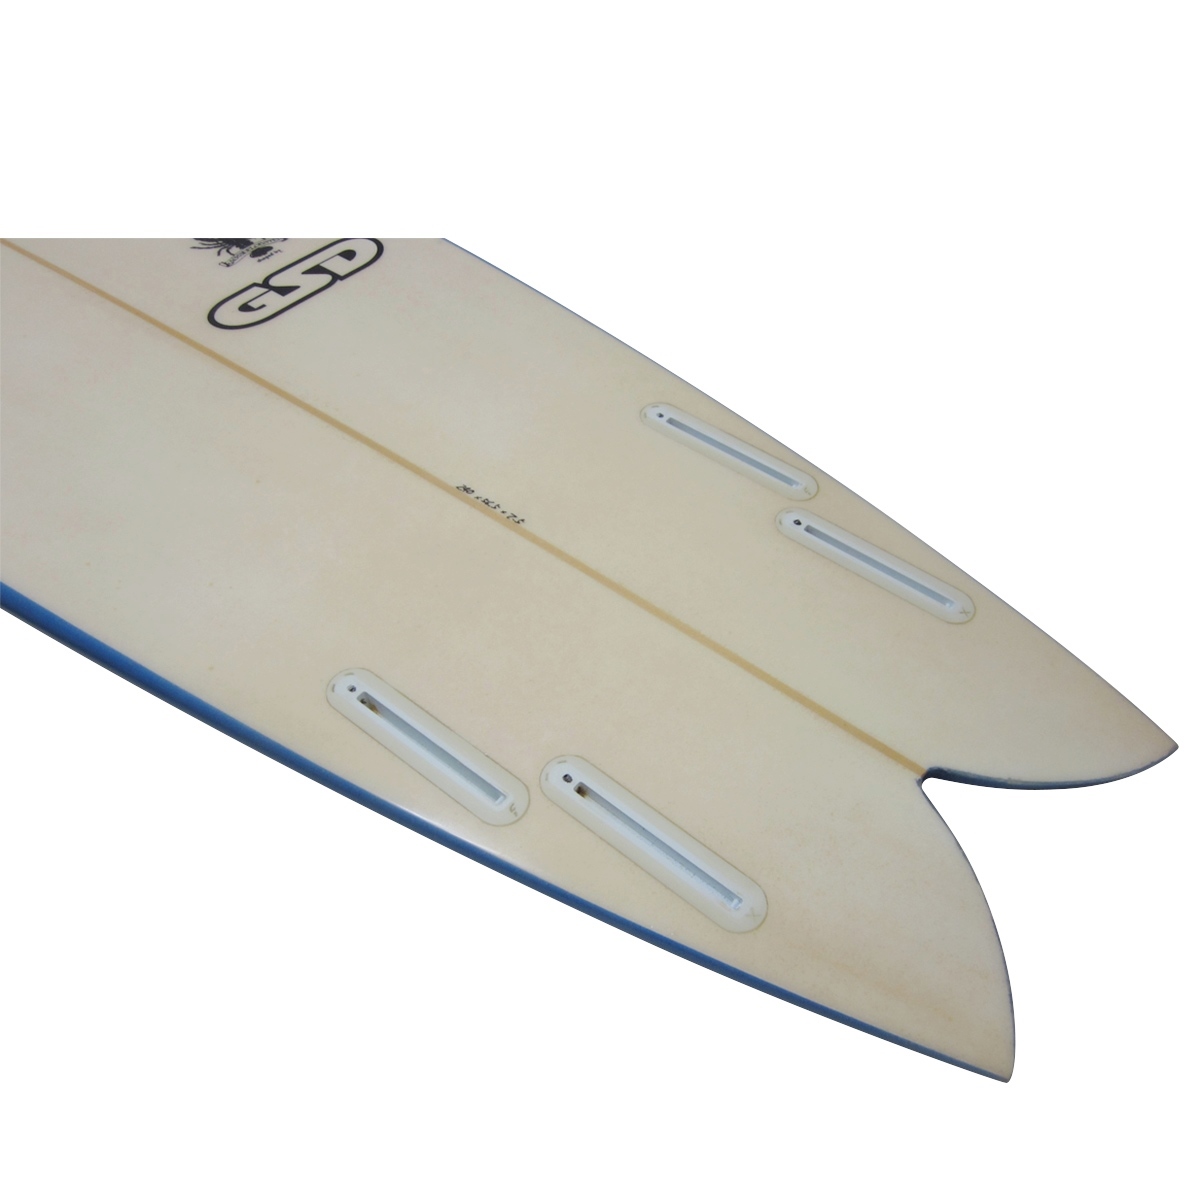 gabo surf /  7`10 Custom Fish shaped by Backsidelobster